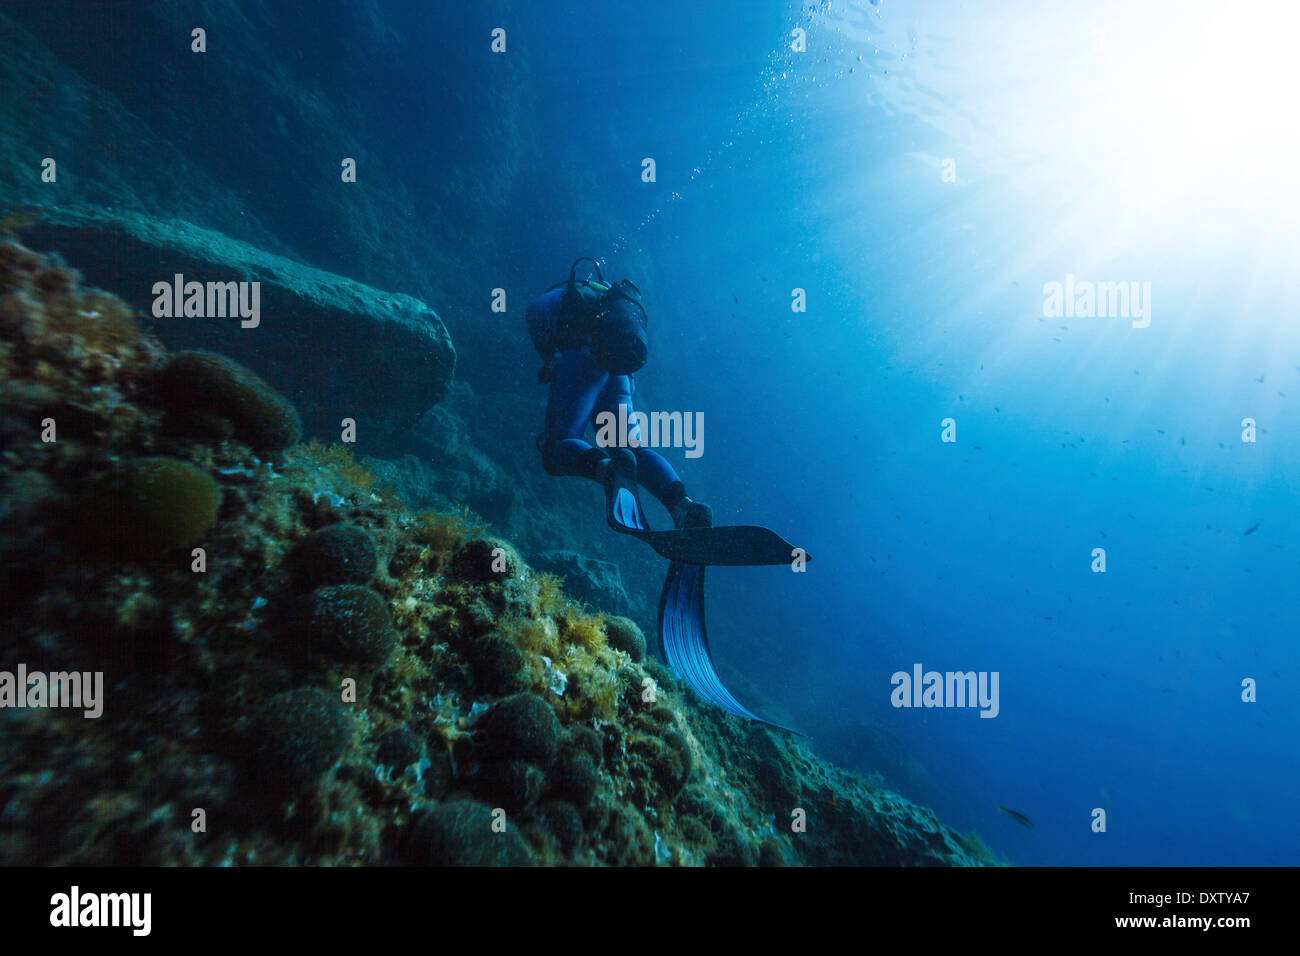 Diving, Sunlight, Adriatic Sea, Croatia, Europe Stock Photo